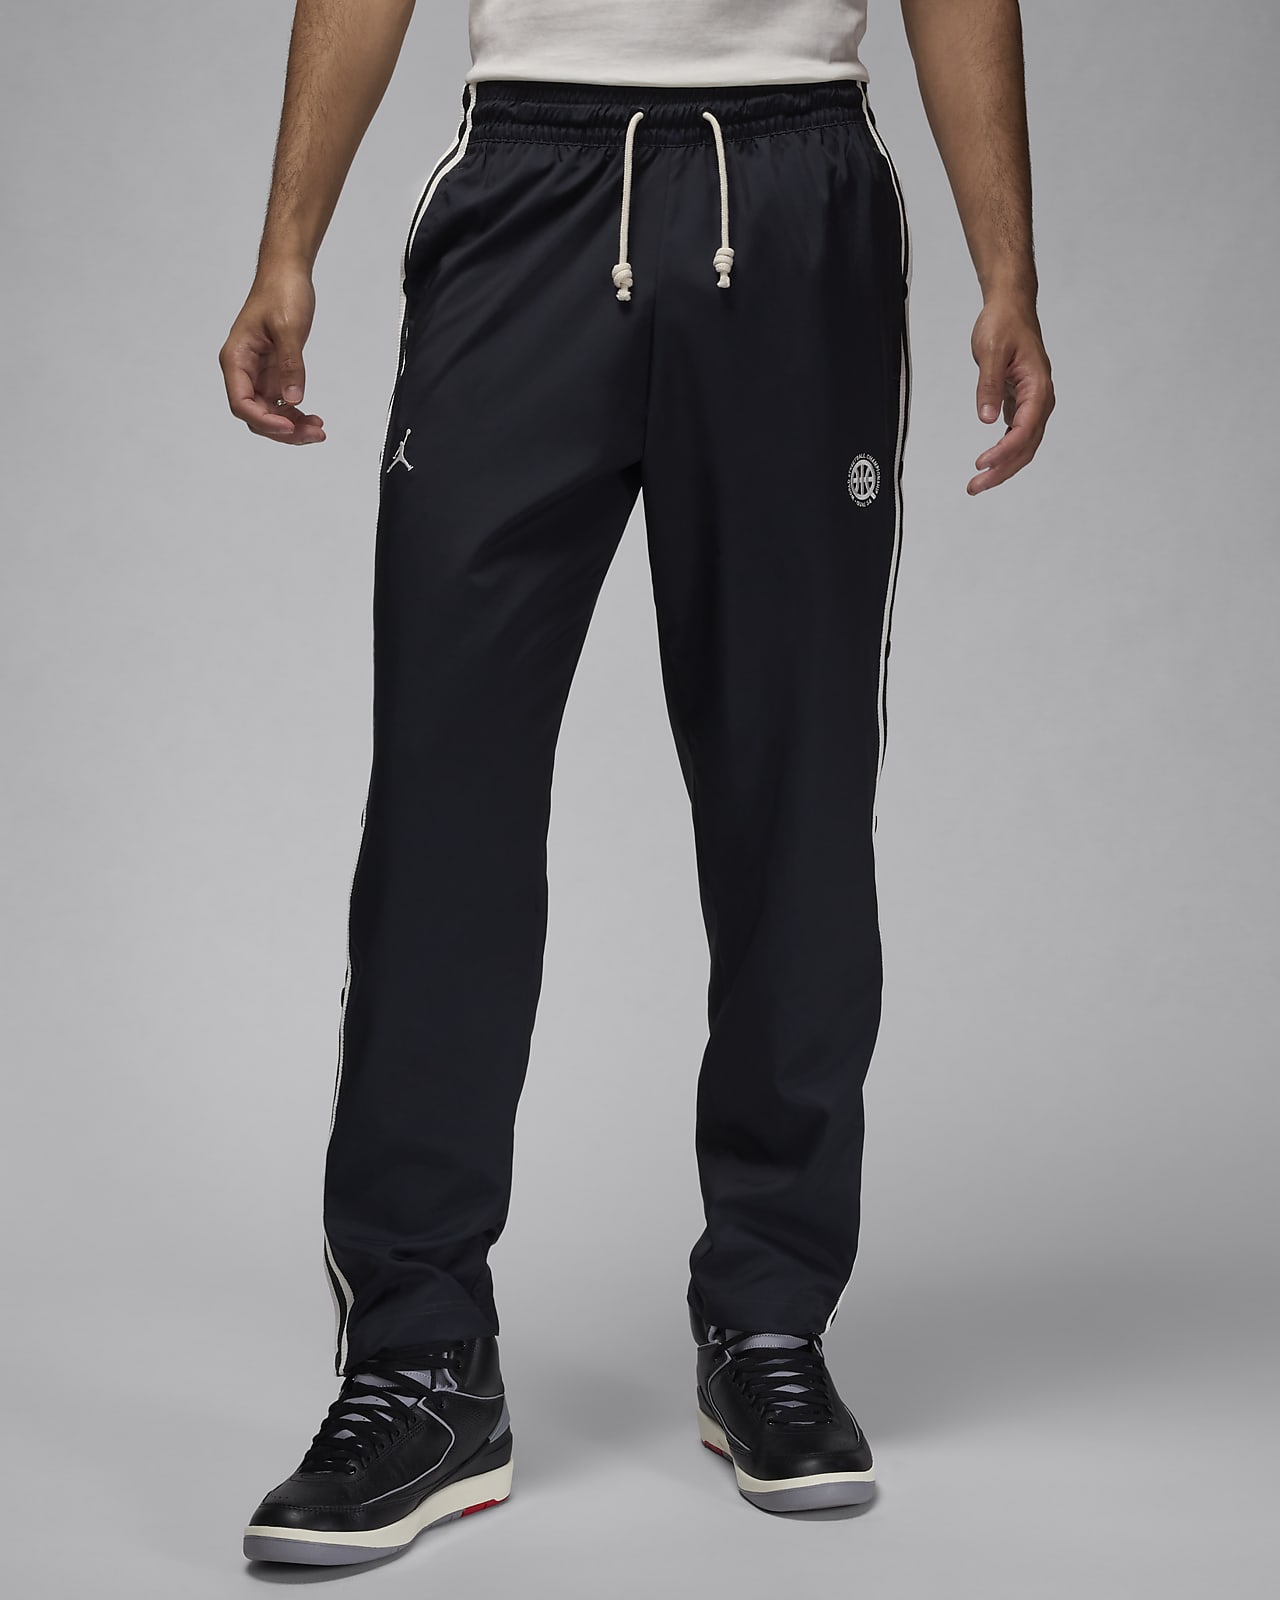 Pantaloni con bottoni laterali Jordan Quai 54 – Uomo